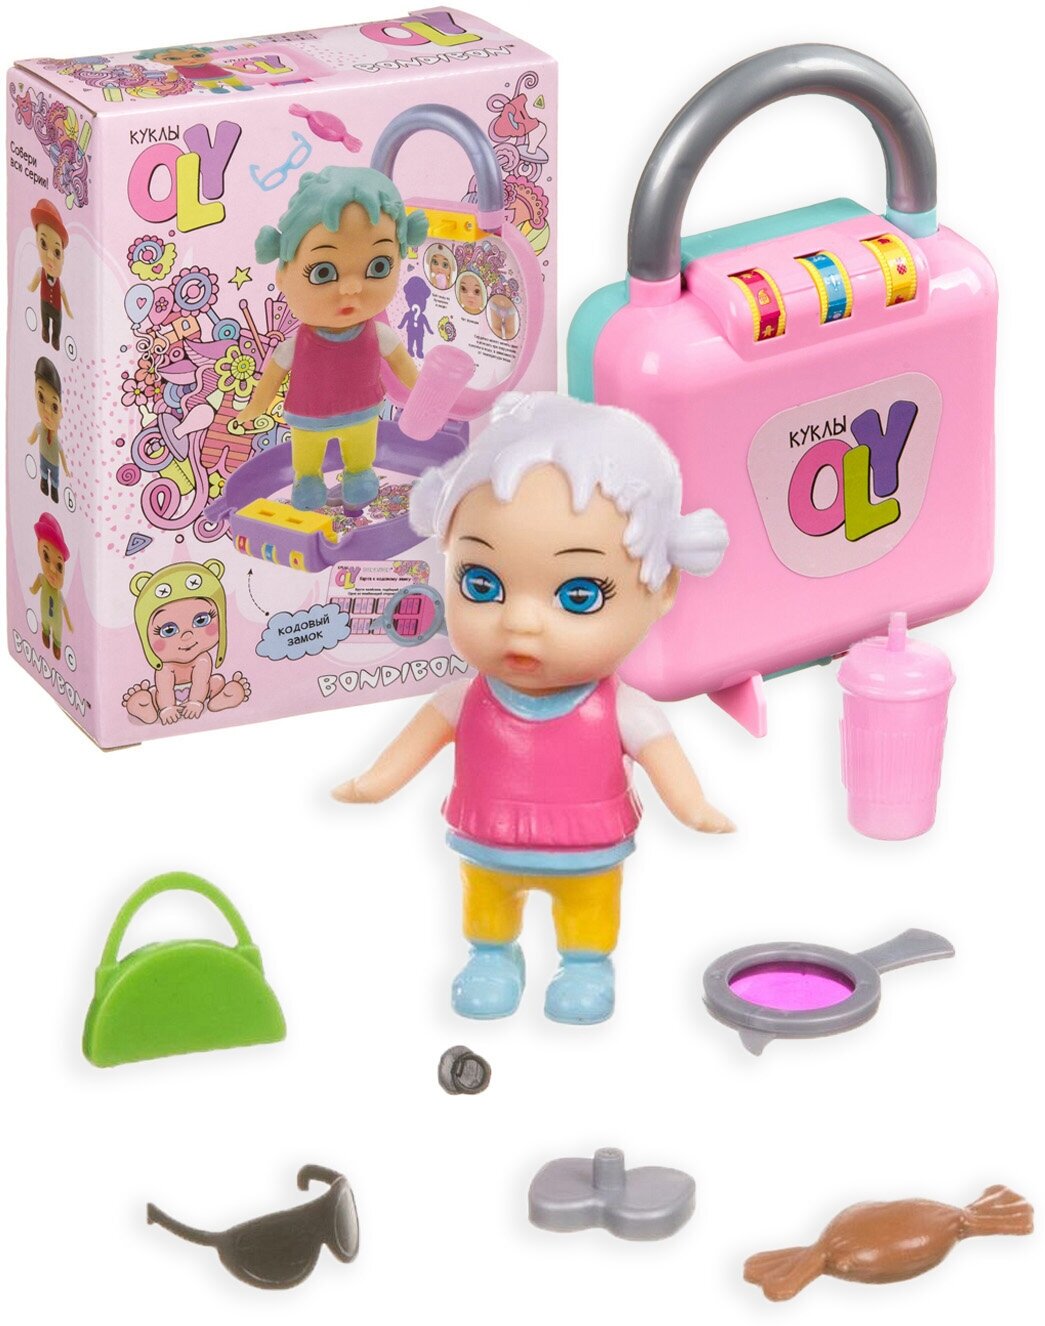 Куколка OLY в парике и аксессуарами в чемоданчике на кодовом замке №4